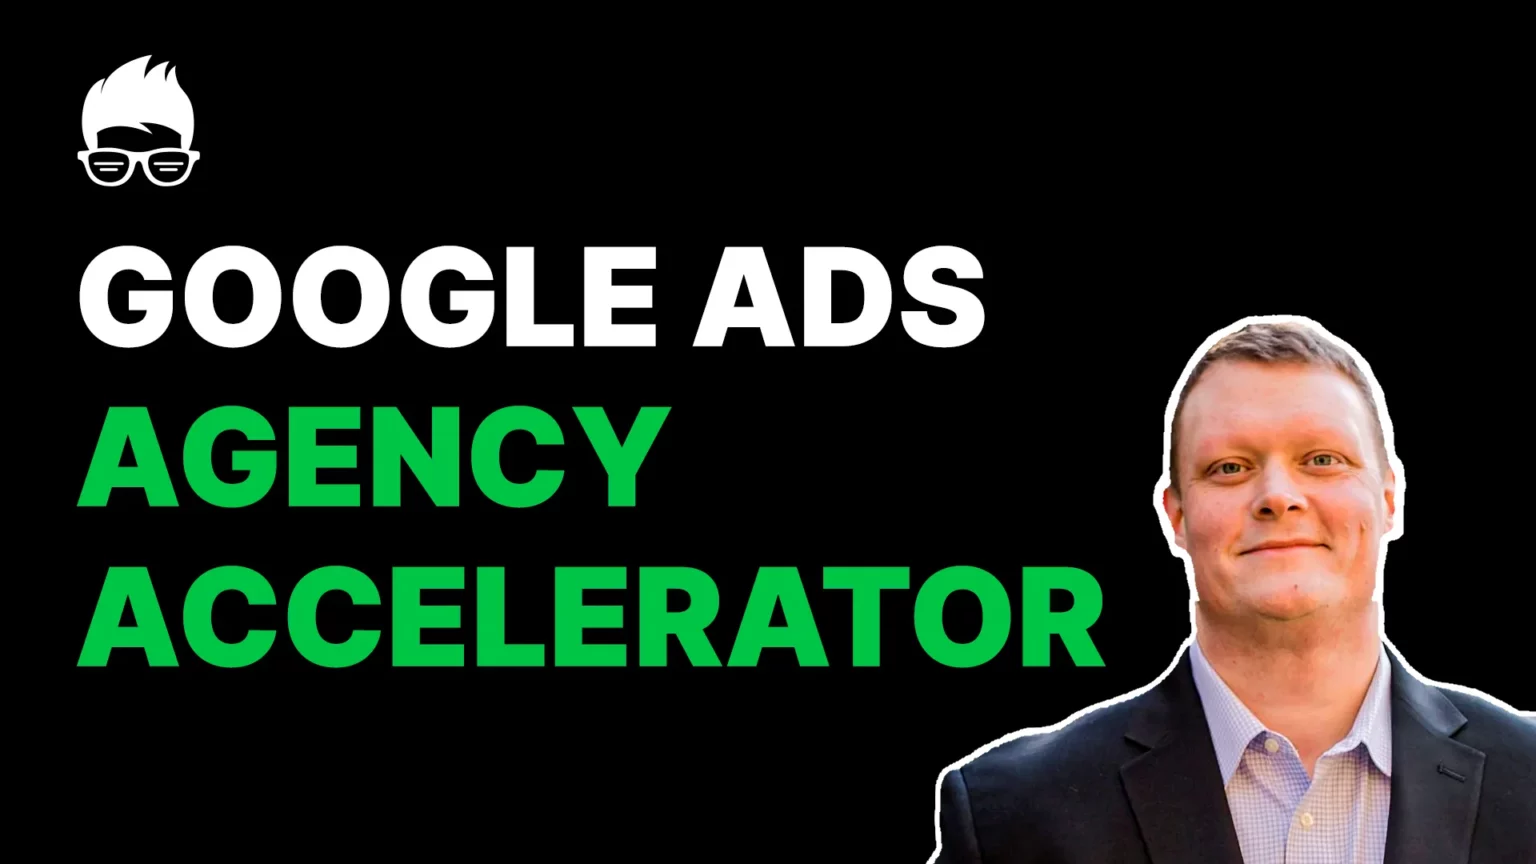 Google Ads Agency Accelerator Video Intro